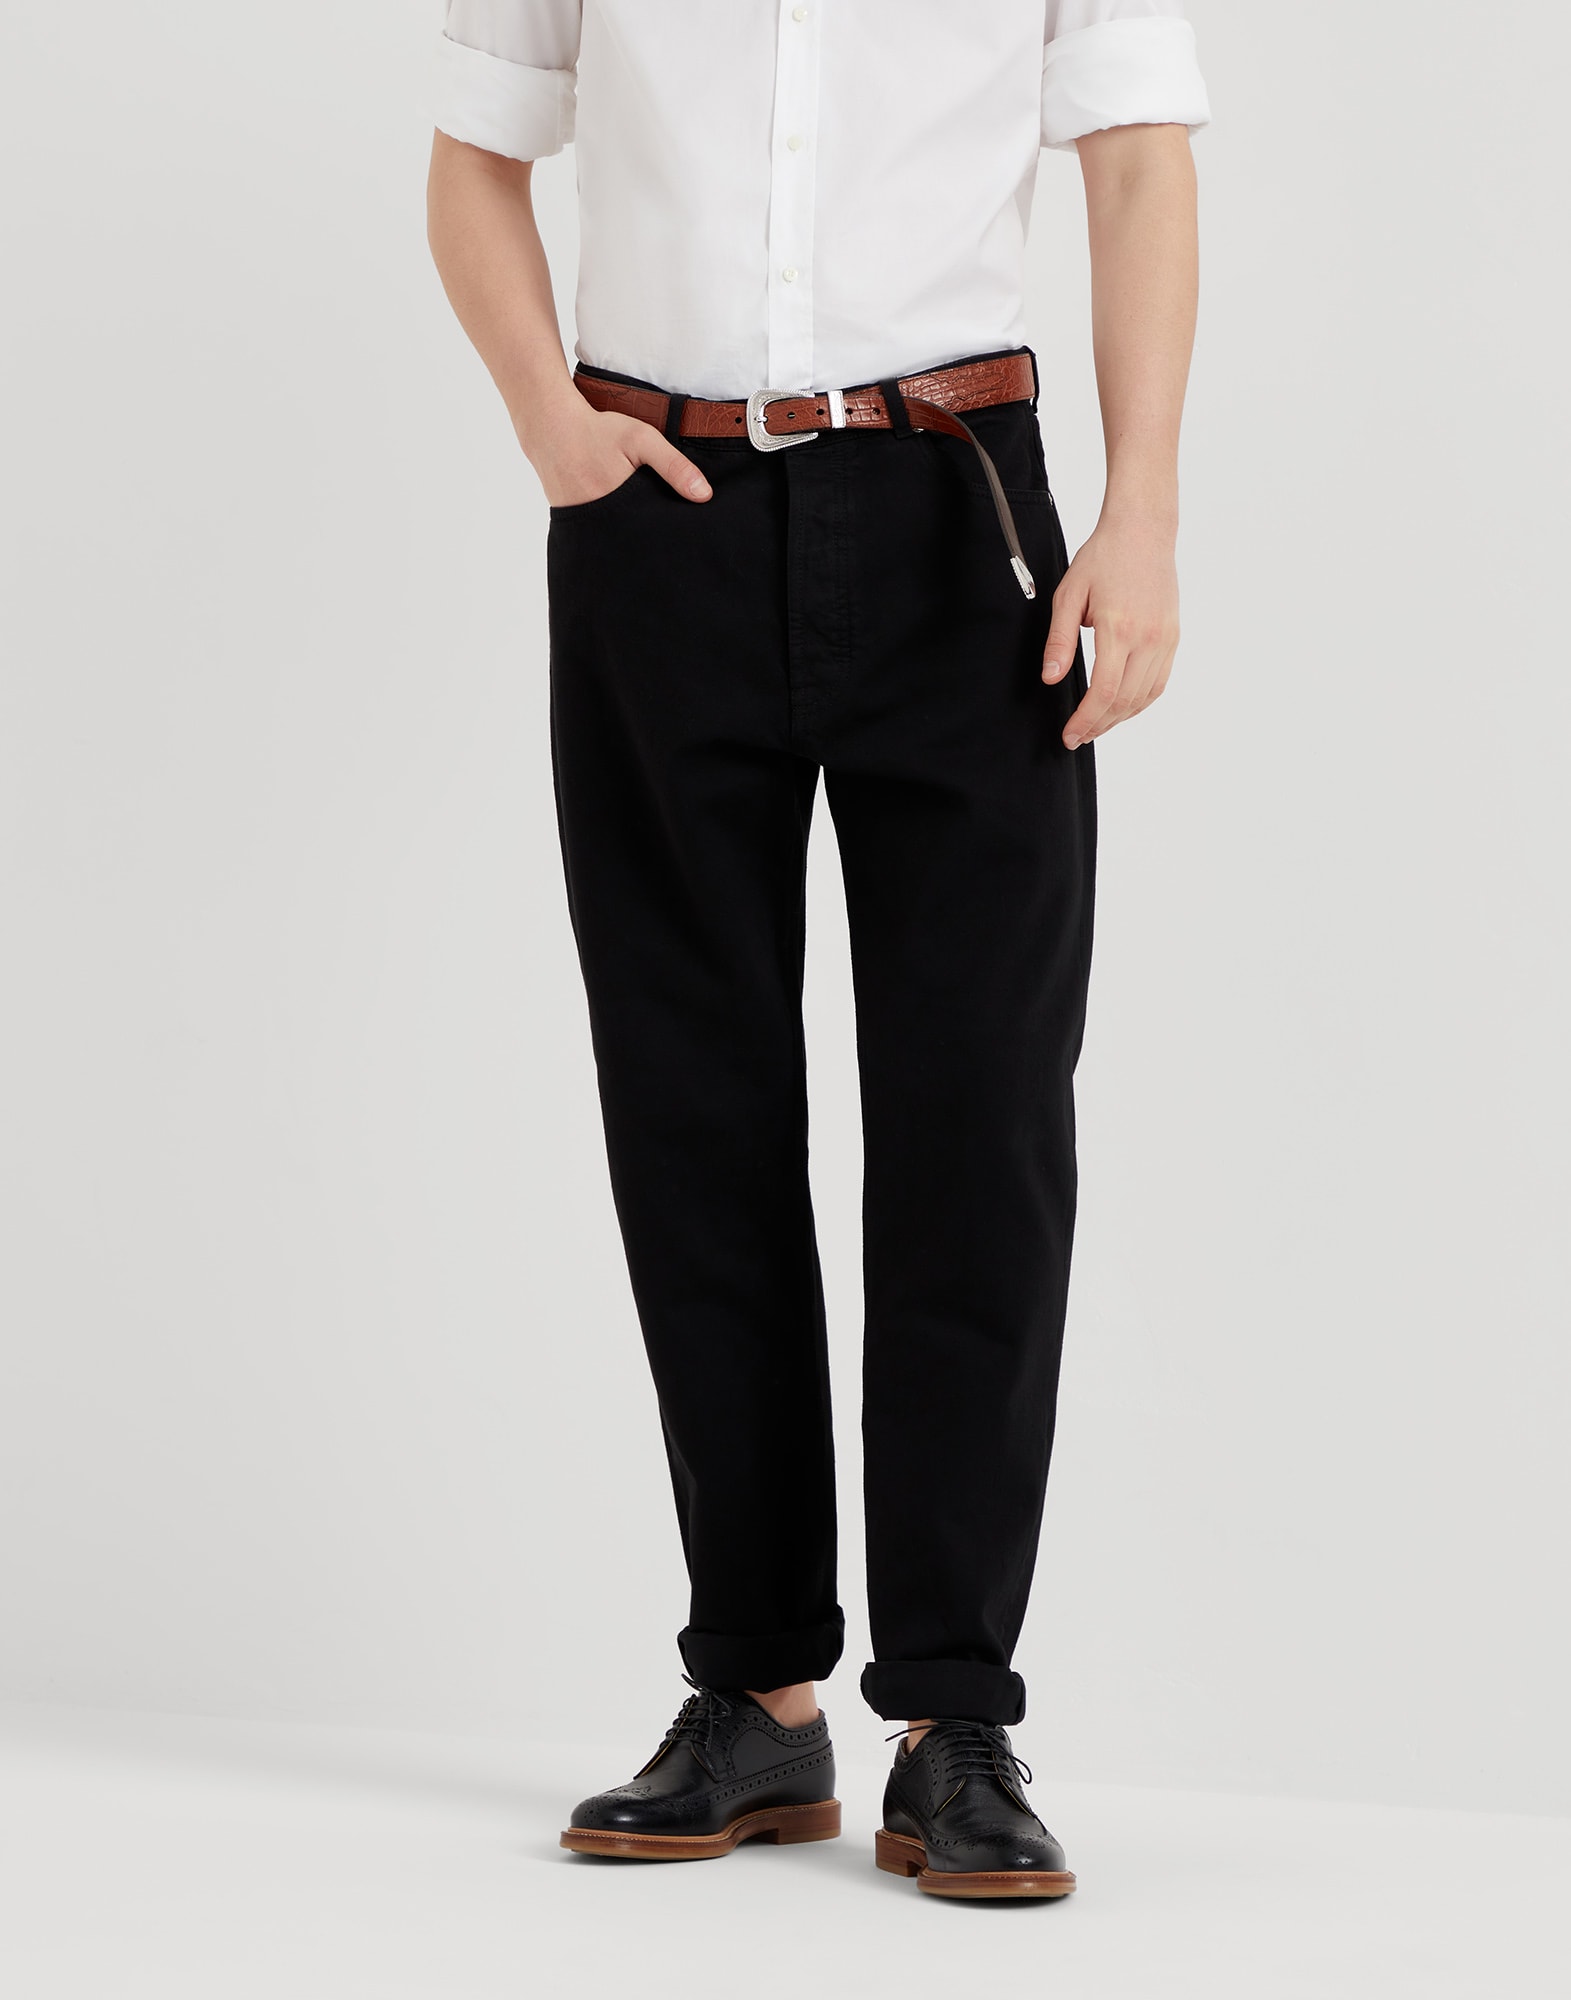 Iconic fit five-pocket trousers Black Man -
                        Brunello Cucinelli
                    